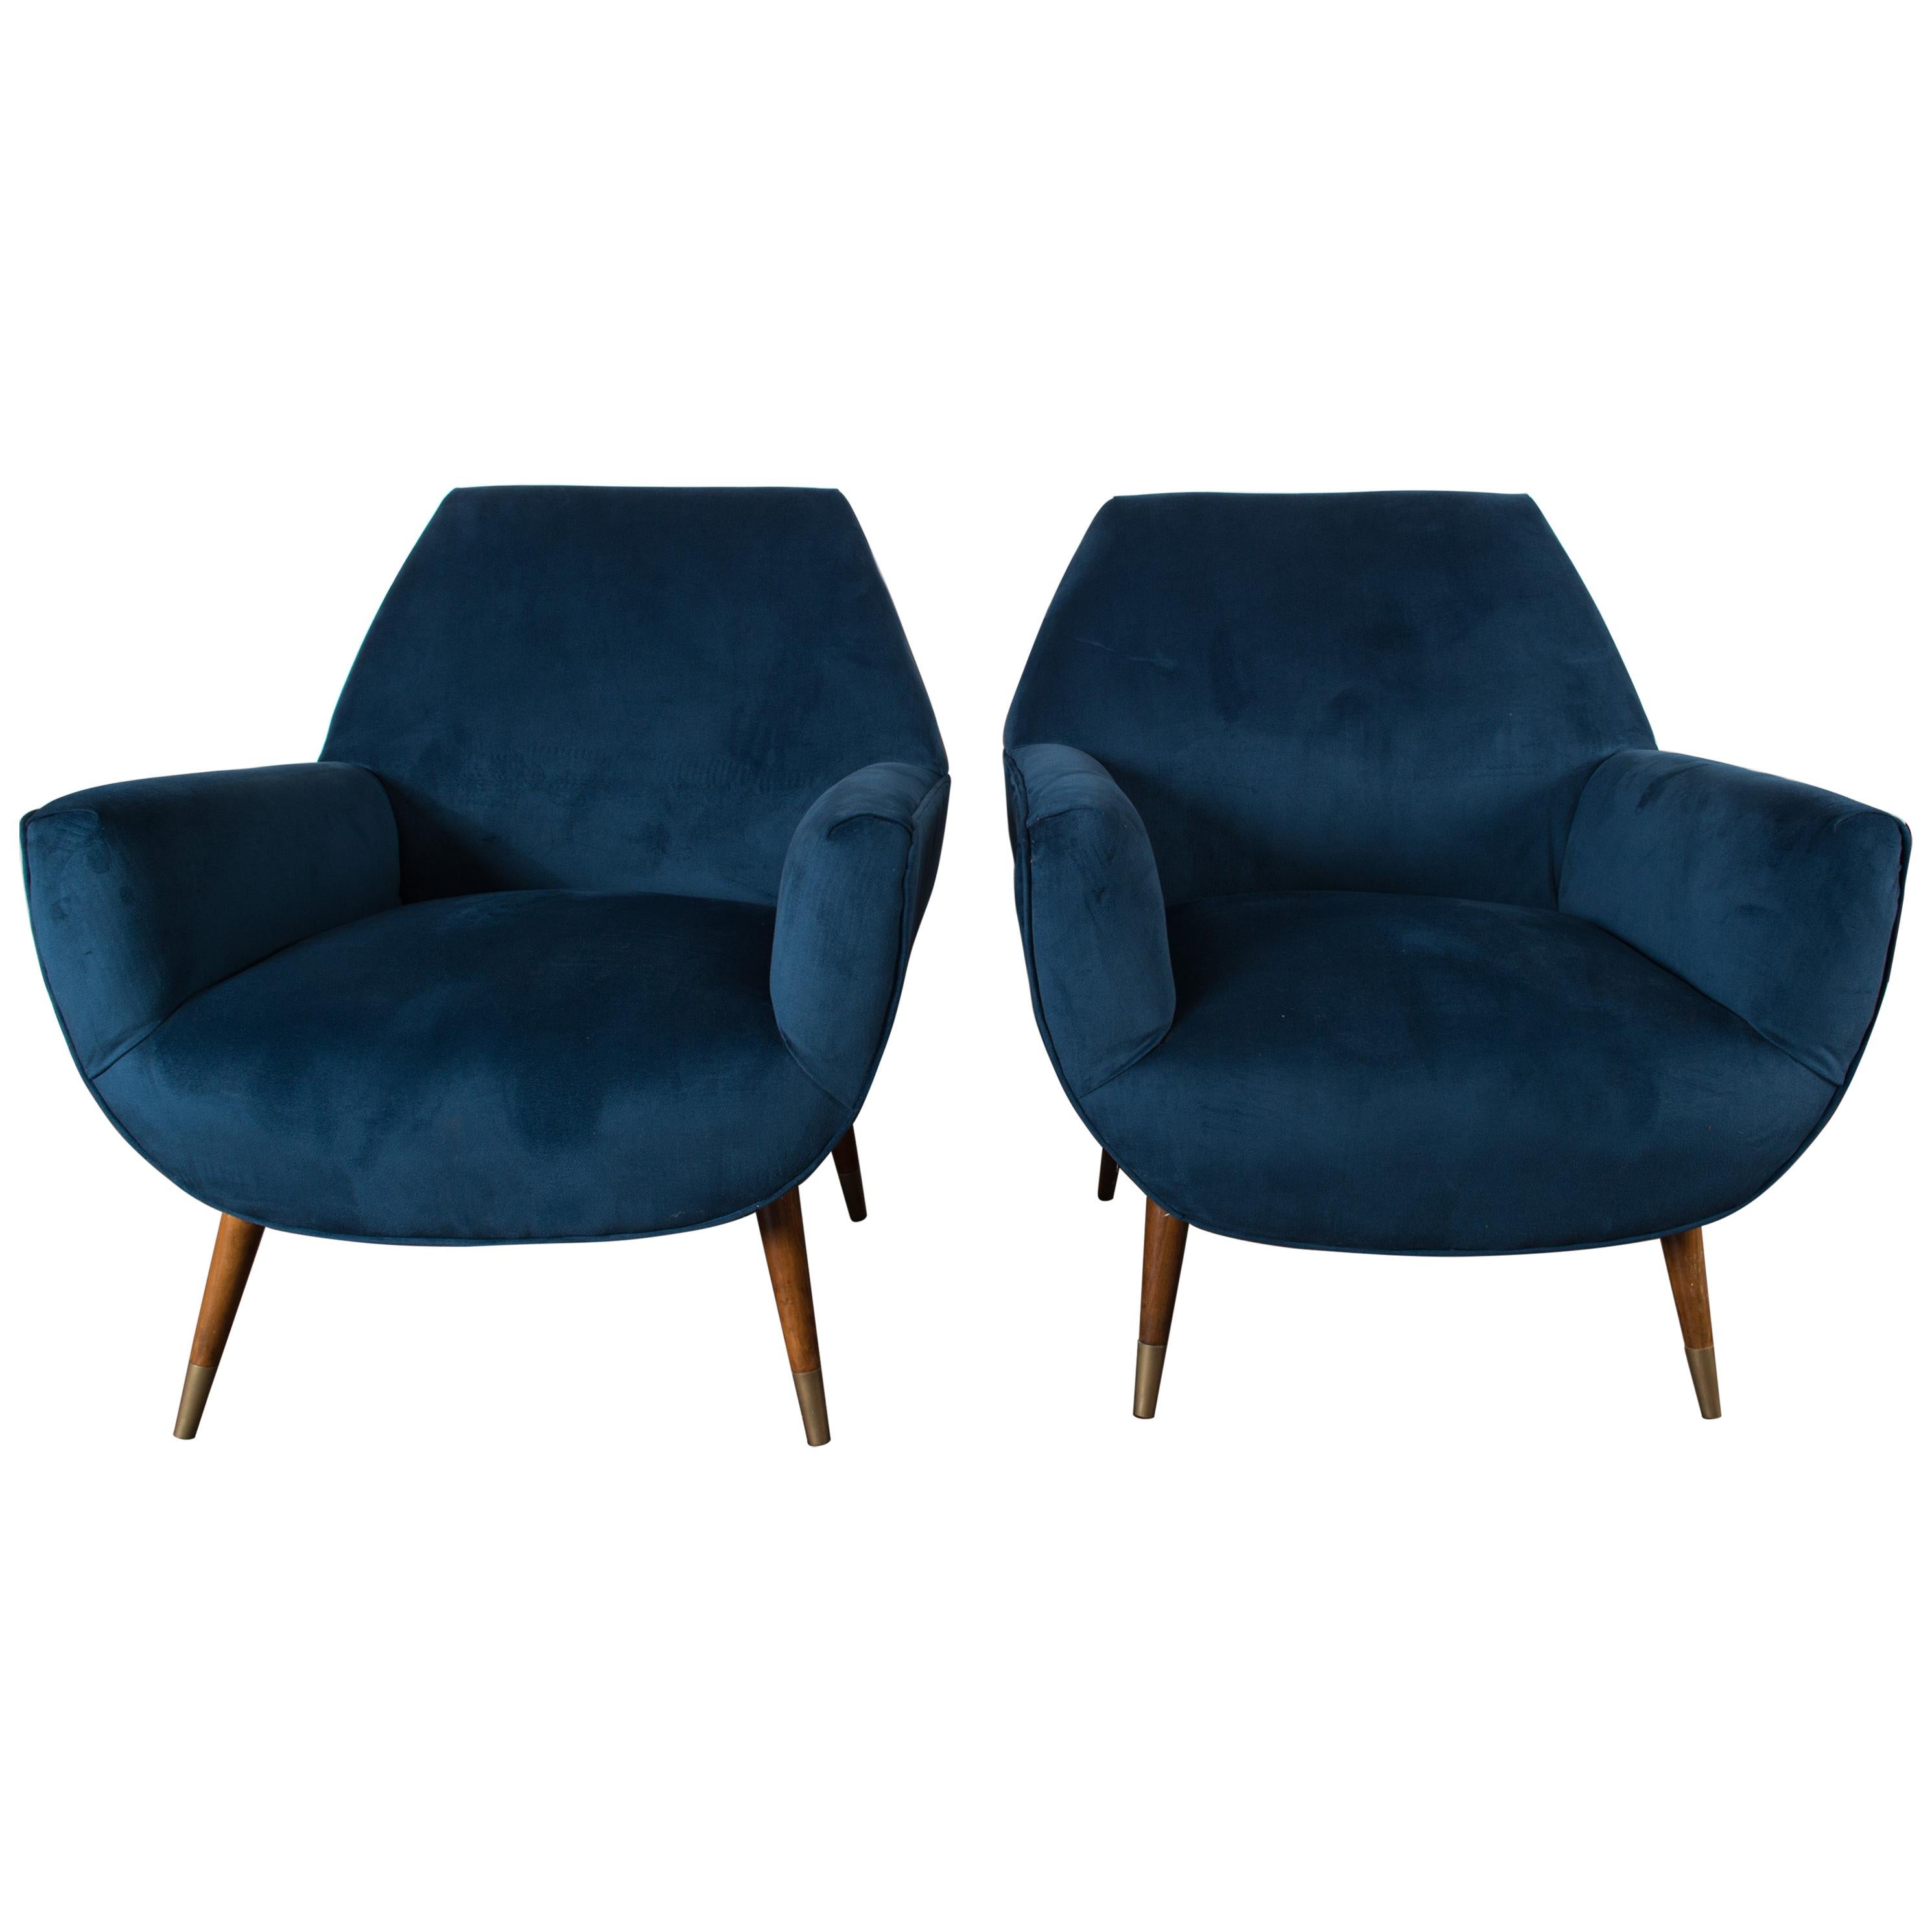 Pair of Italian Blue Velvet Mid-Century Modern Lounge Chairs